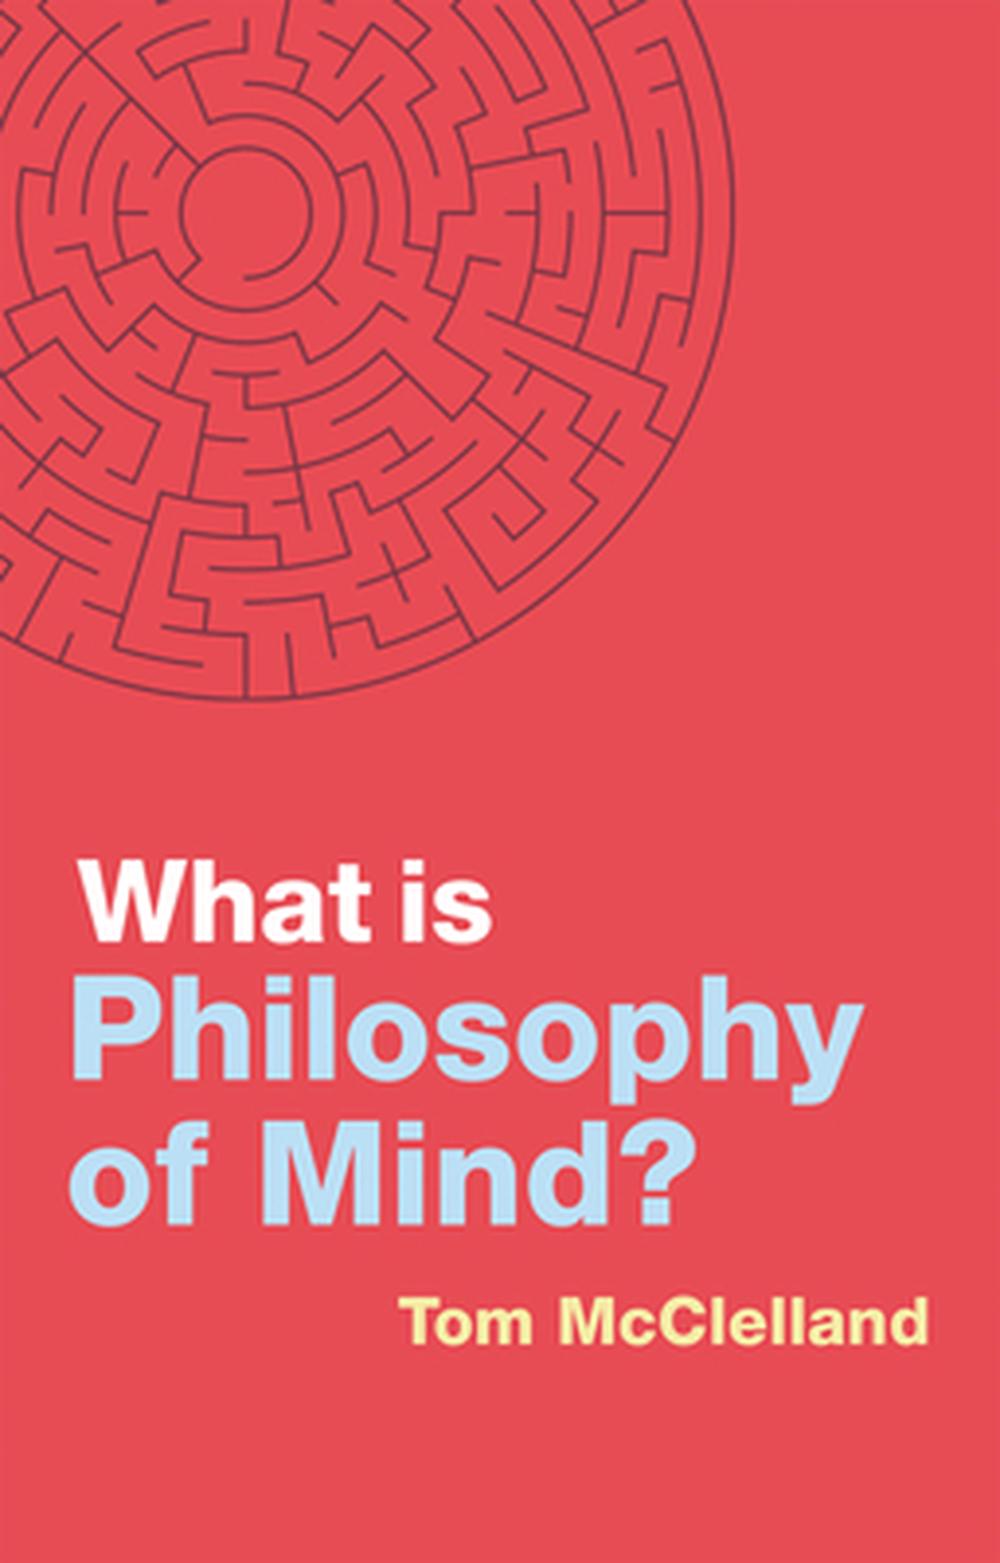 What is Philosophy of Mind? ร้านหนังสือและสิ่งของ เป็นร้านหนังสือภาษาอังกฤษหายาก และร้านกาแฟ หรือ บุ๊คคาเฟ่ ตั้งอยู่สุขุมวิท กรุงเทพ